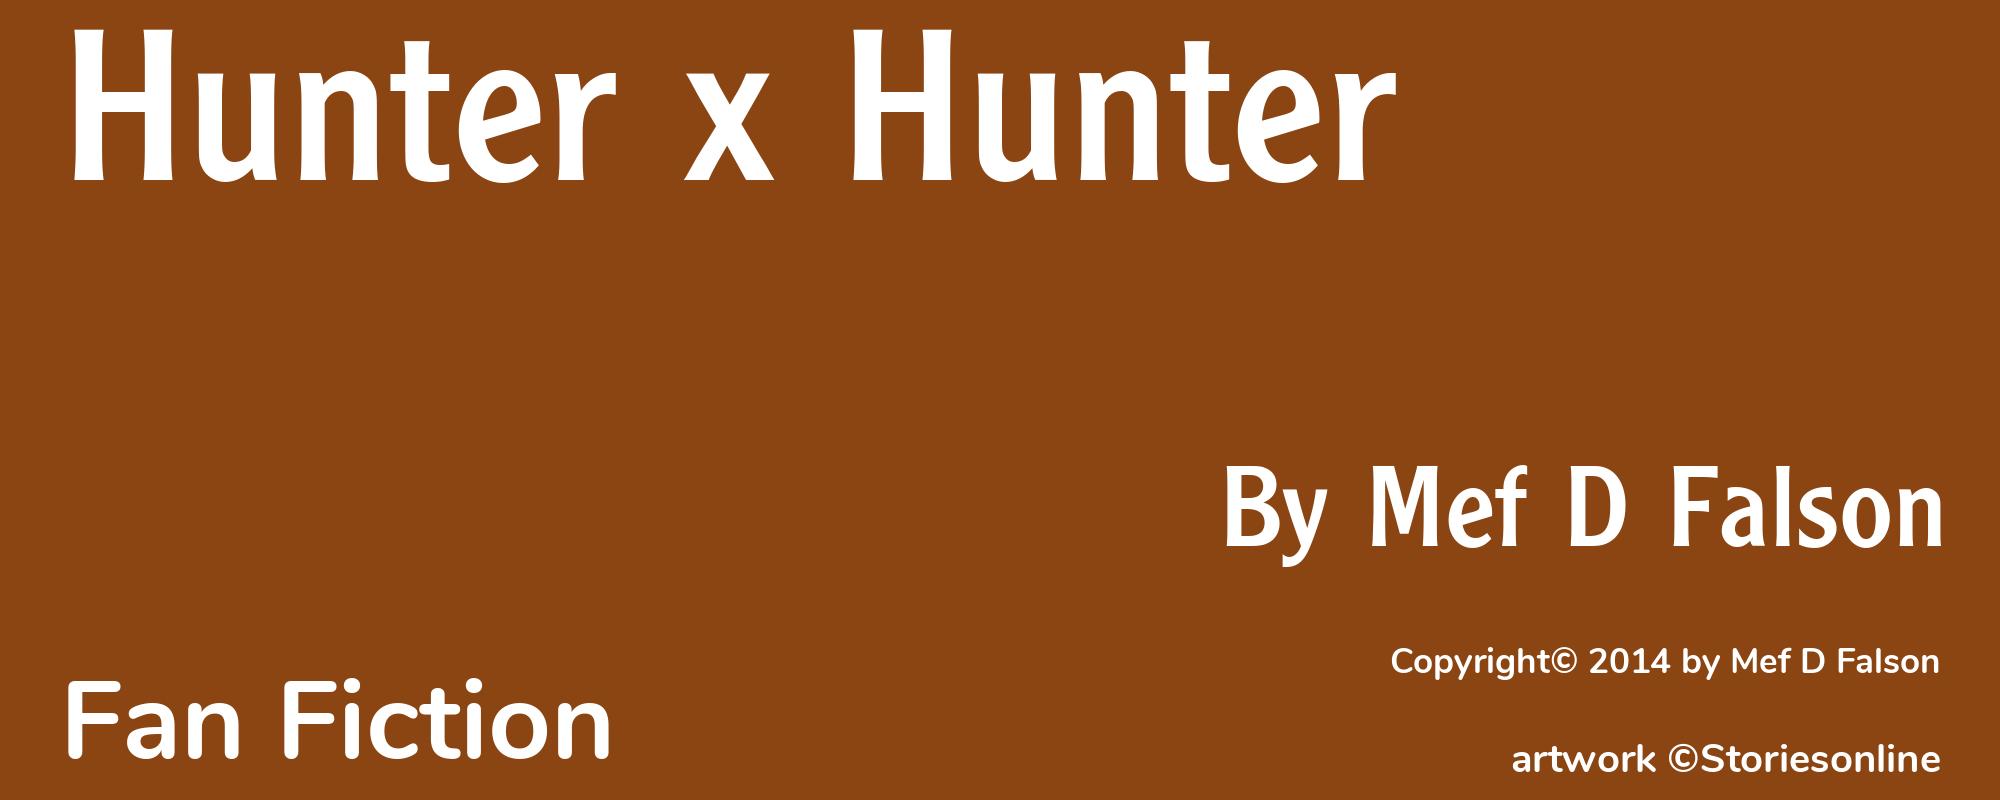 Hunter x Hunter - Cover